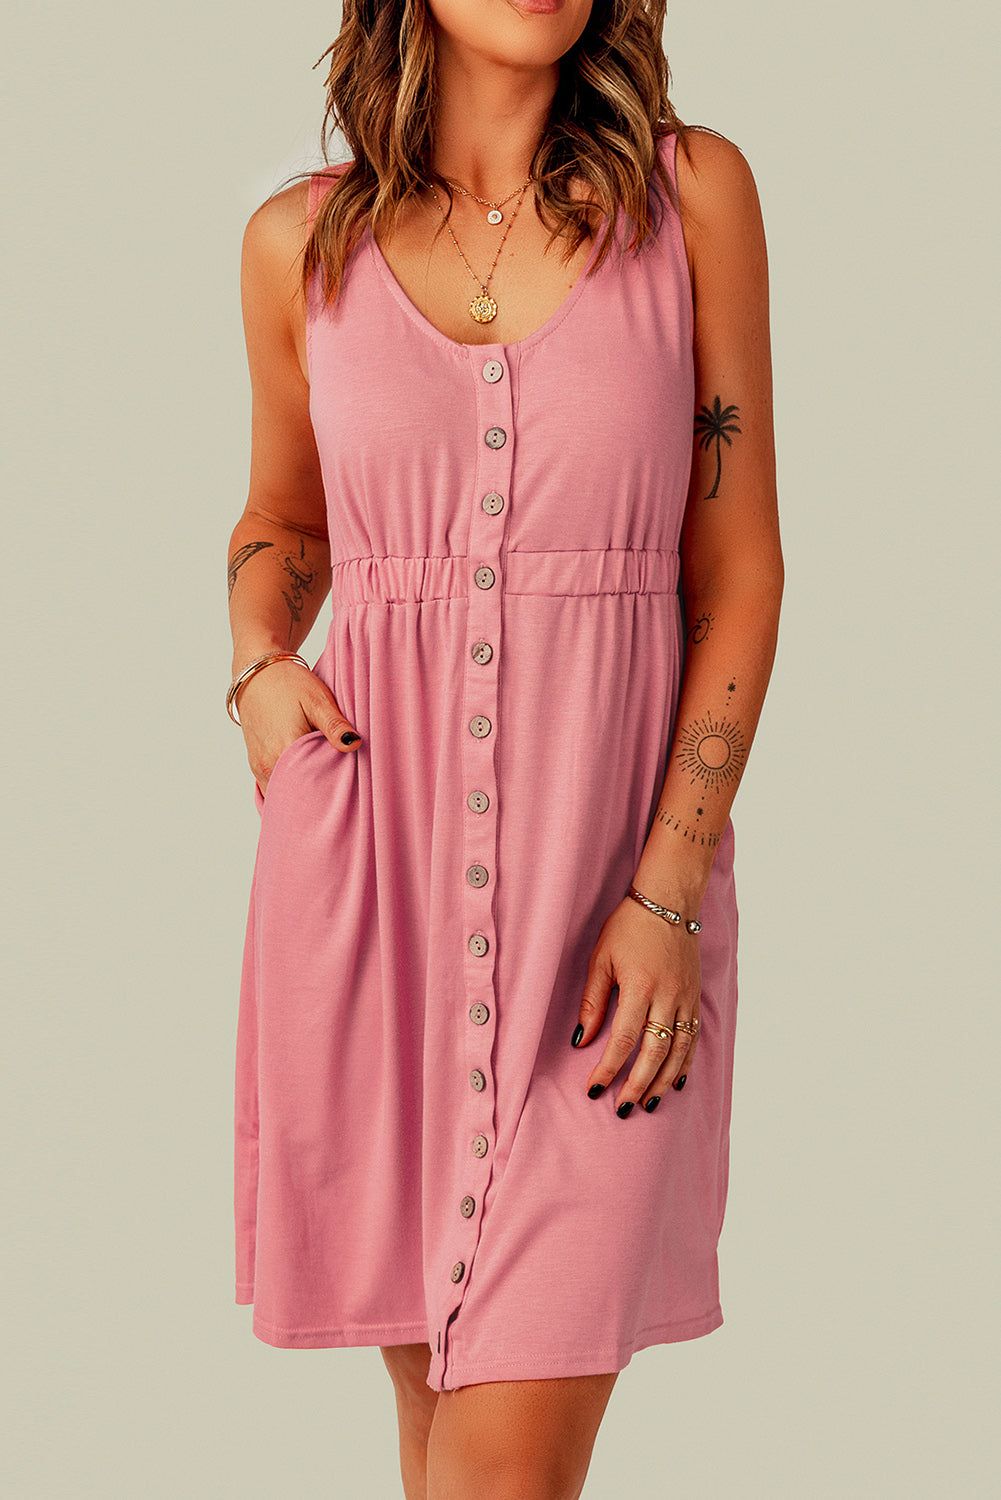 Sleeveless Button Down Mini Dress Print on any thing USA/STOD clothes